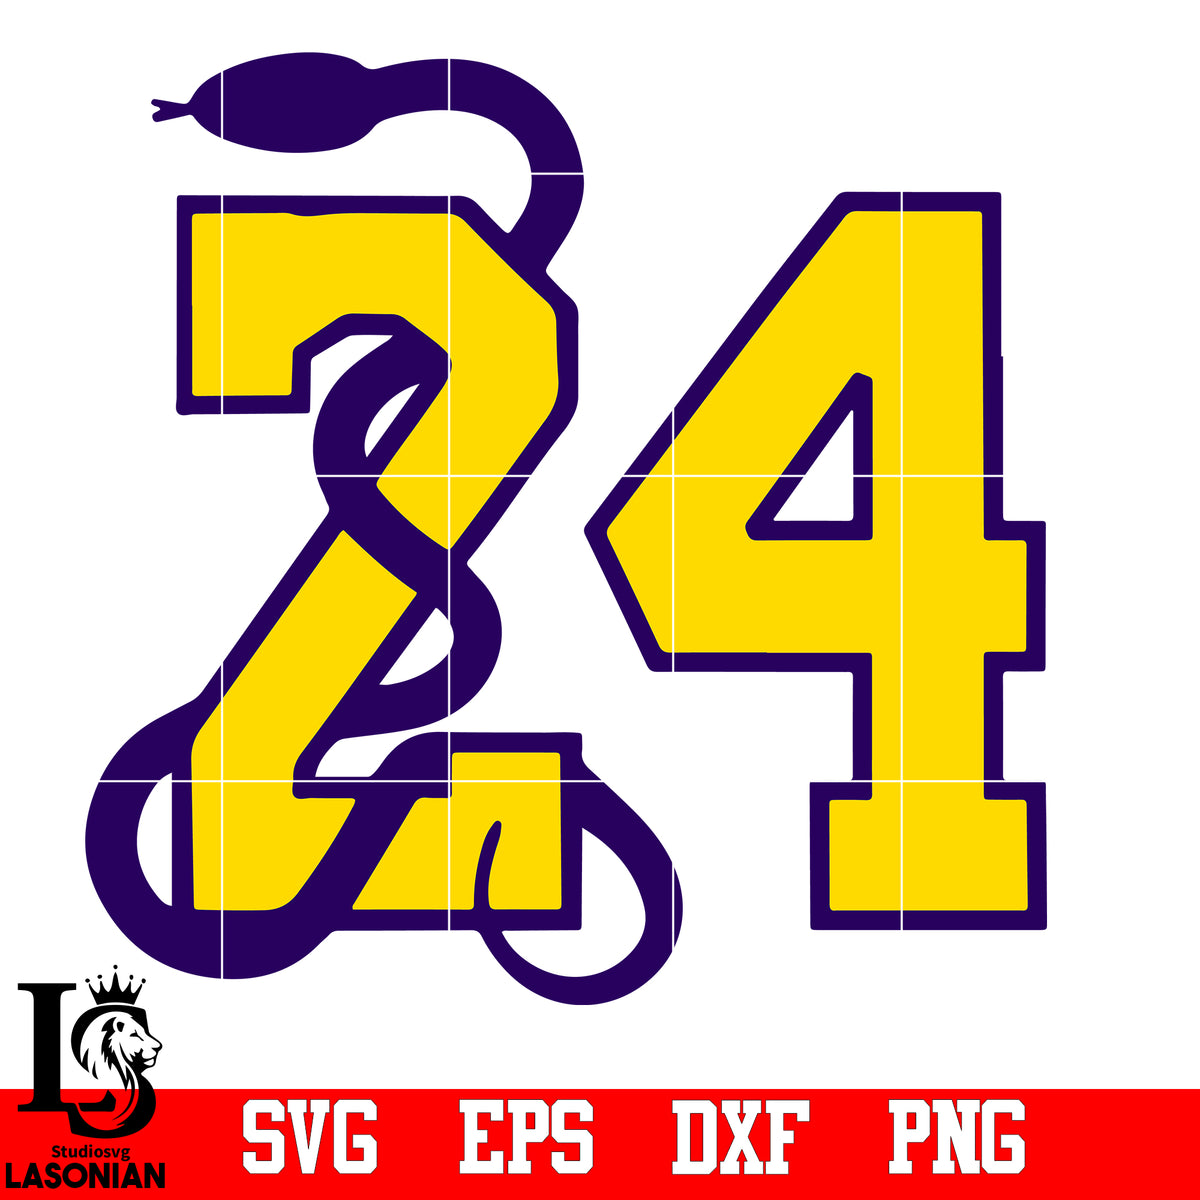 Kobe Bryant Number 8 & Number 24 Lakers Canvas - REVER LAVIE